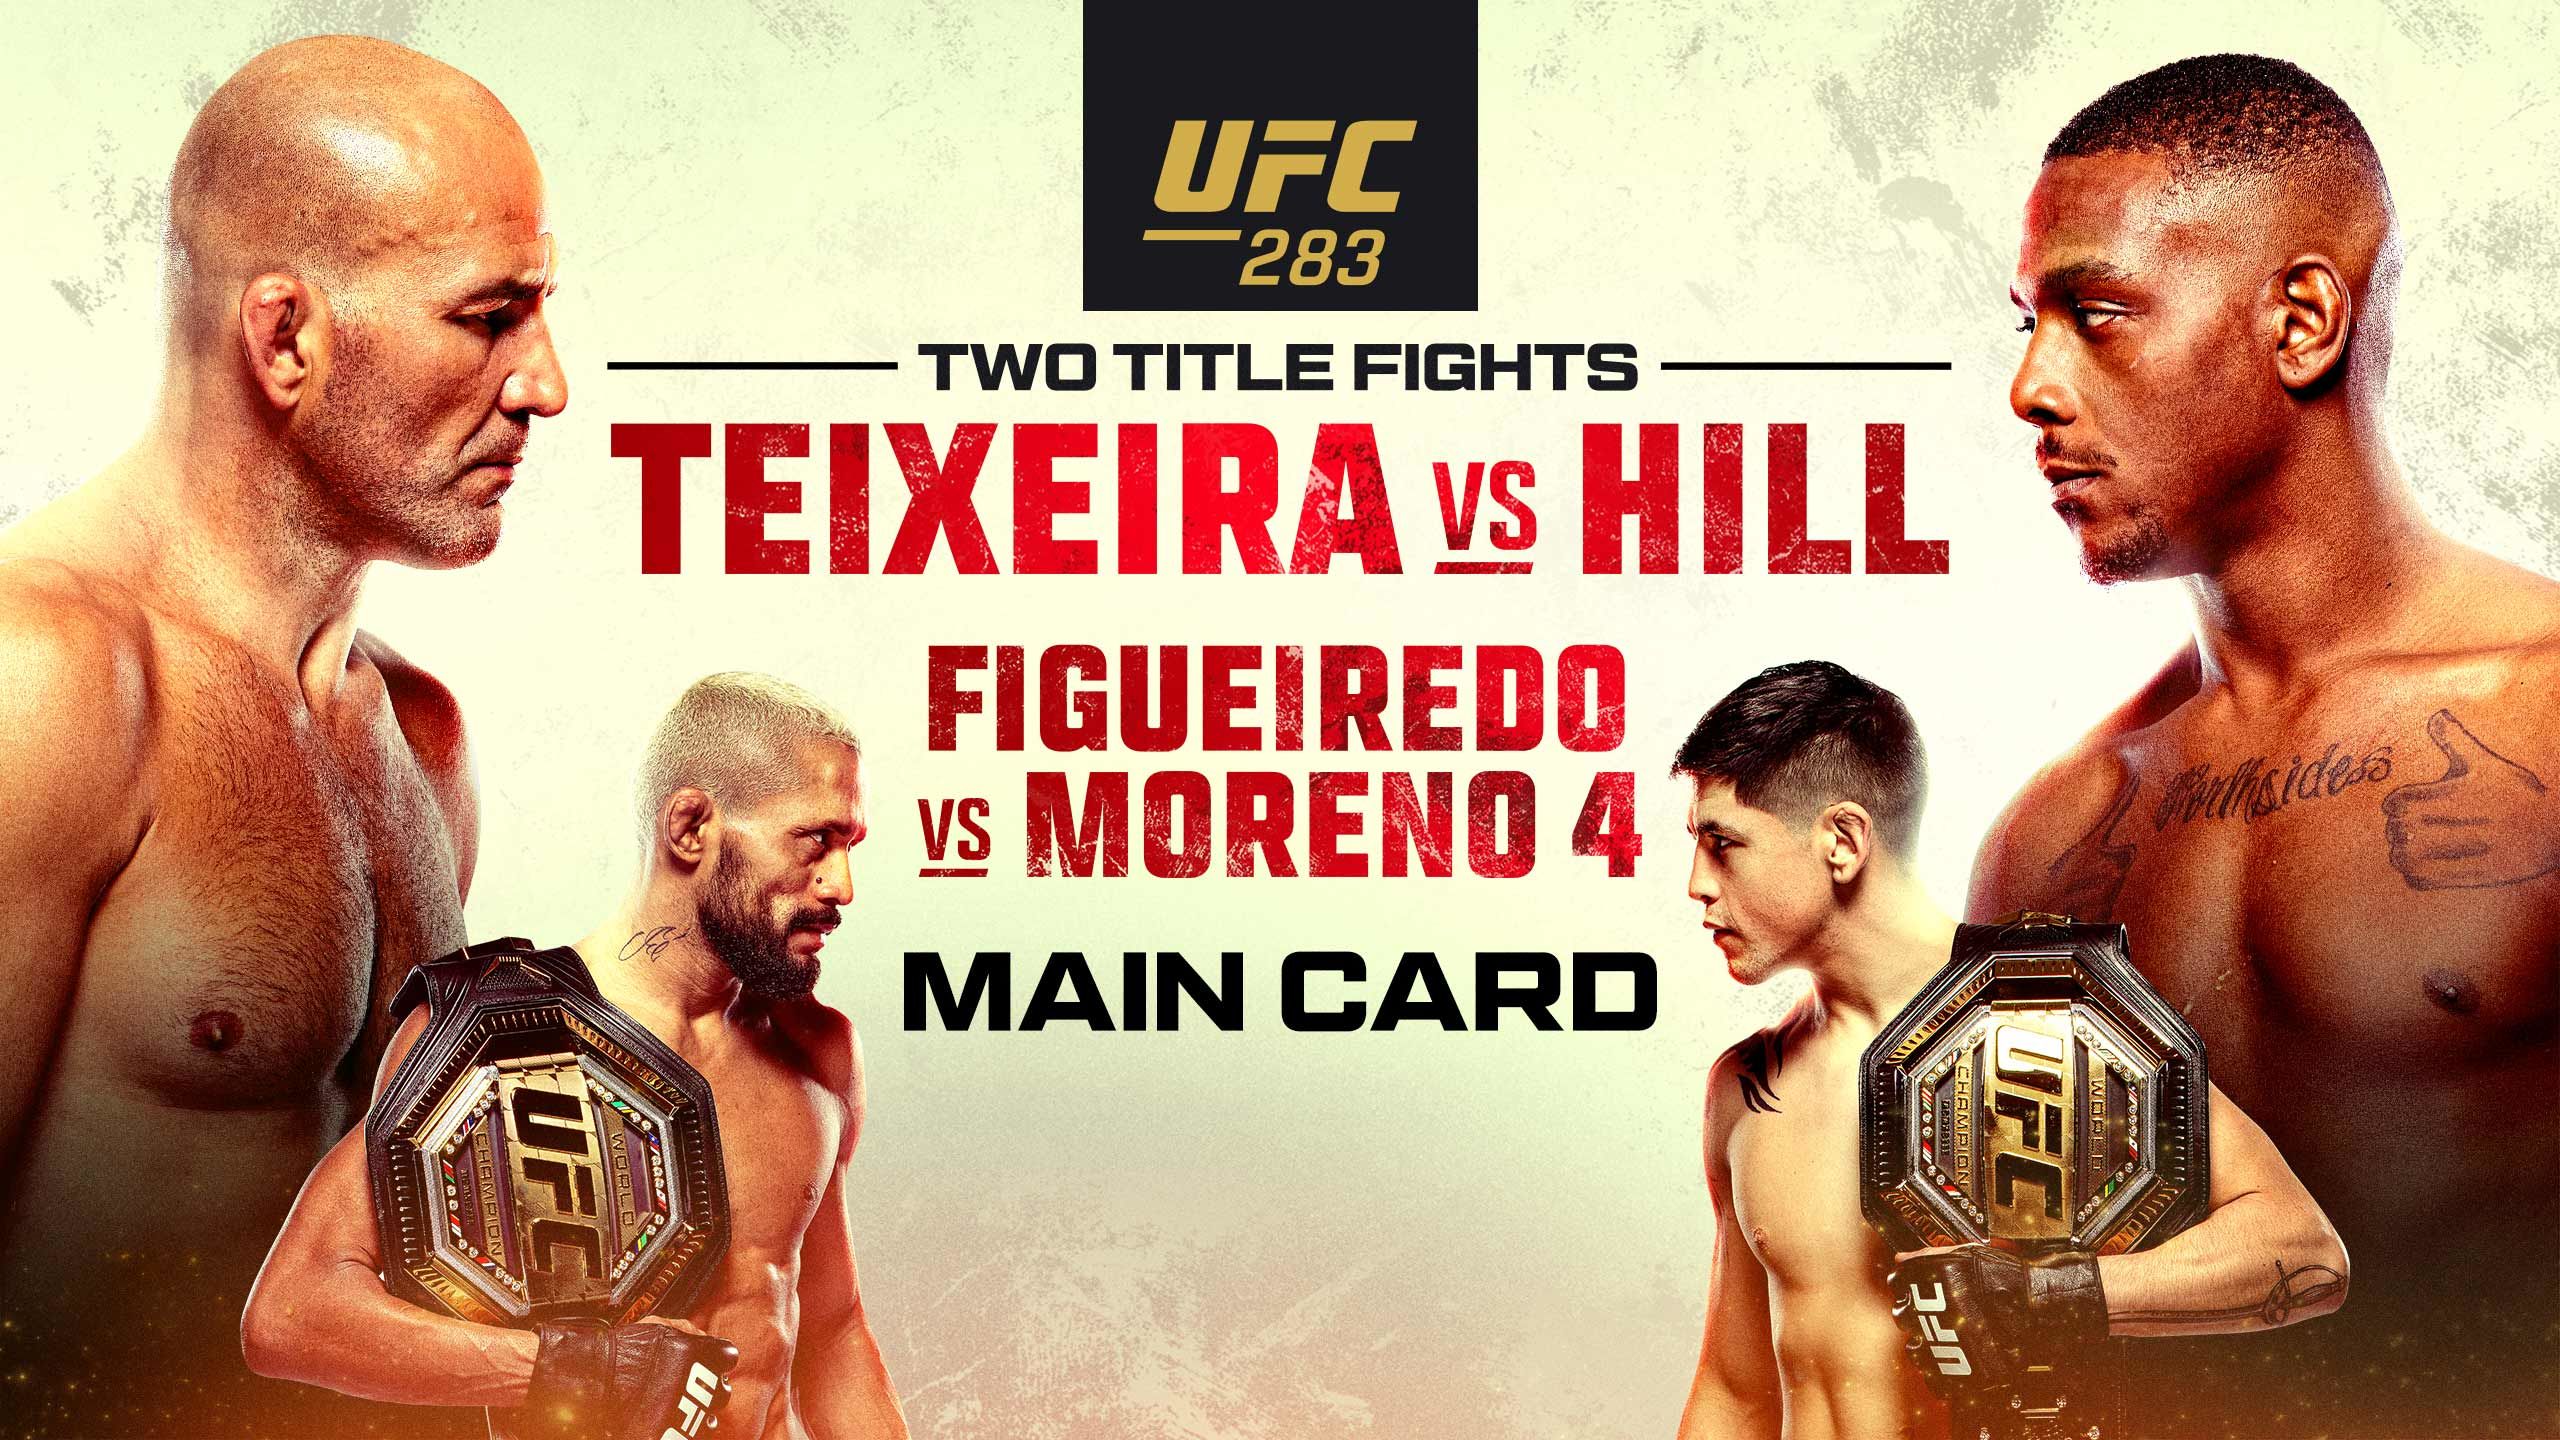 Full UFC 283 card: Teixeira vs Hill